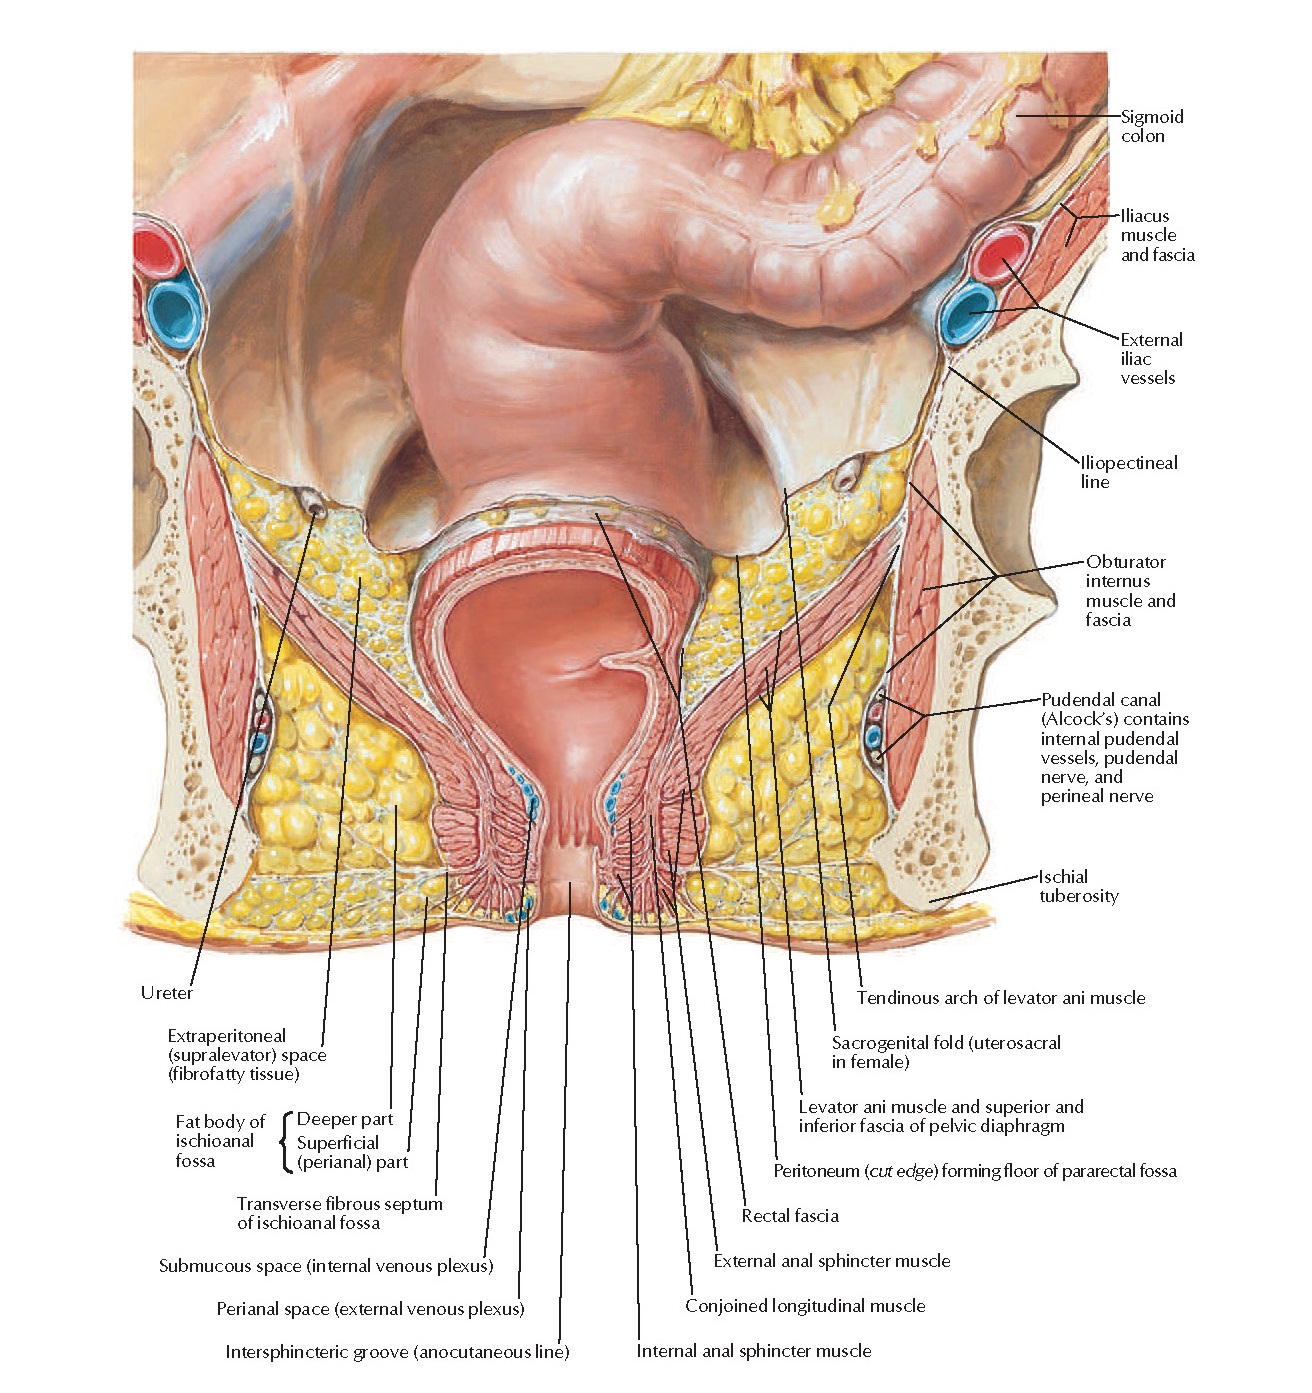 анатомия мужского анала фото 7